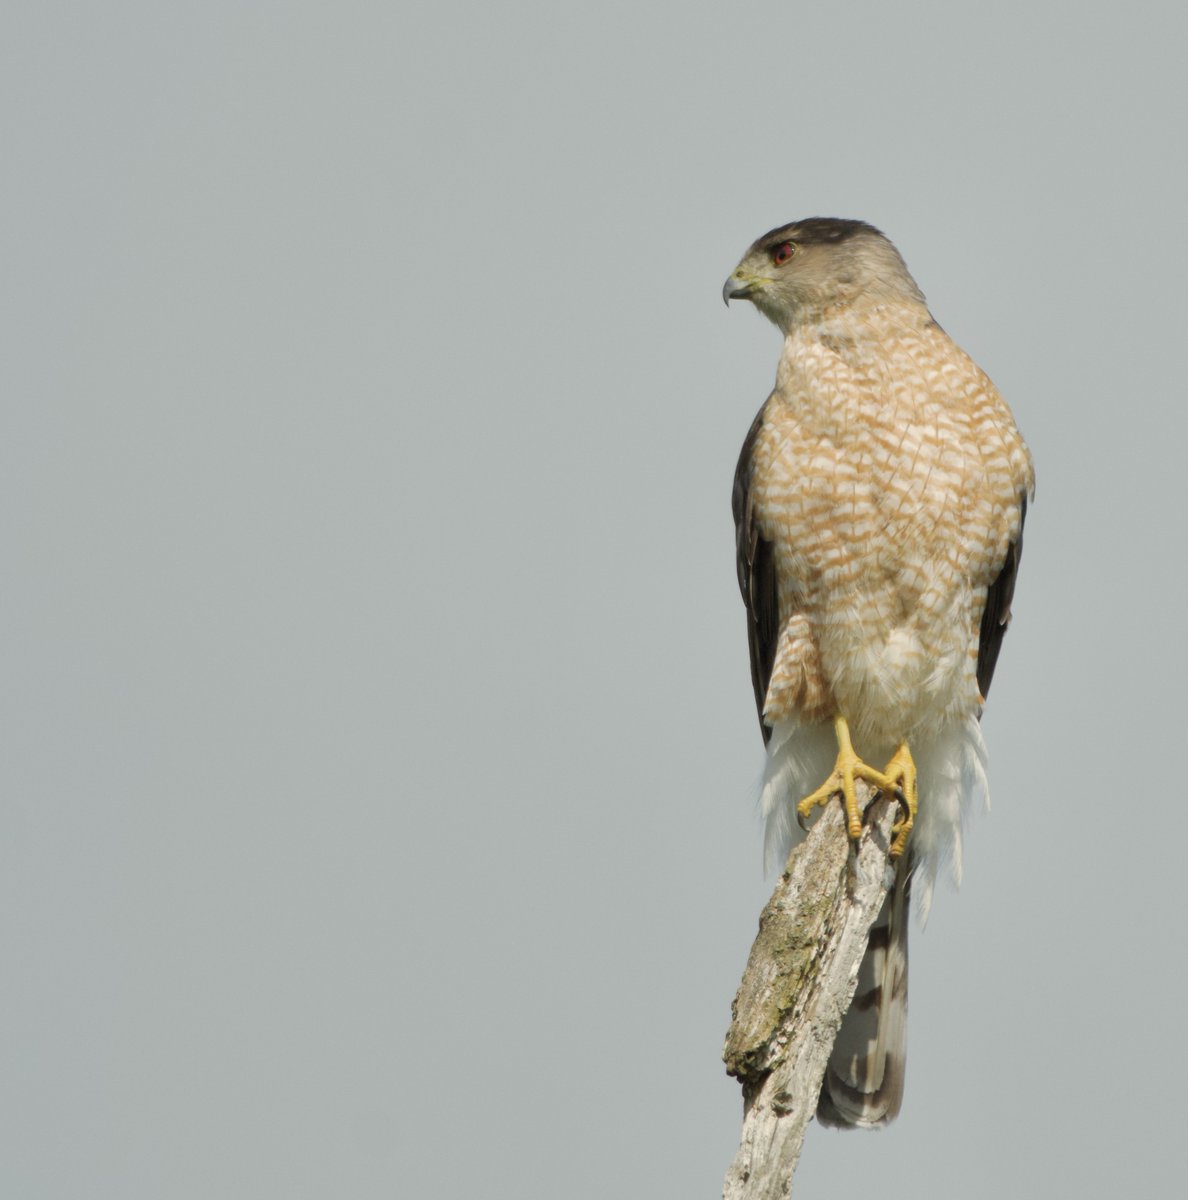 #MyYardMyBirds #Nature #Wildlife #Photography #Hawk #BirdsOfPrey